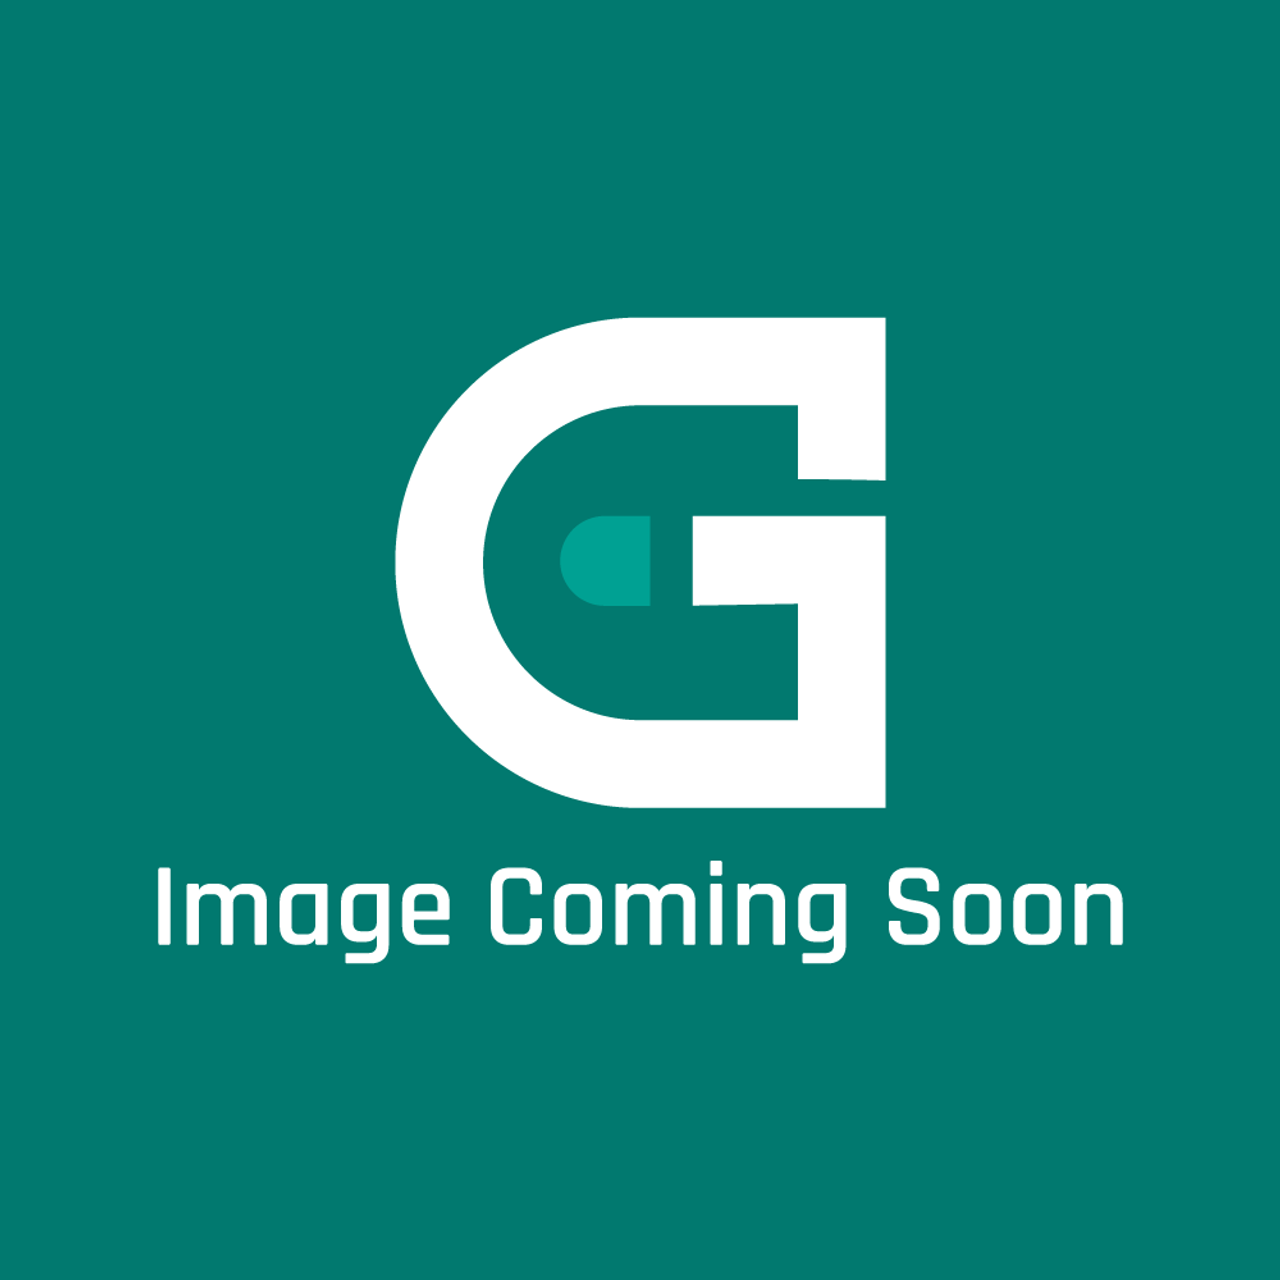 GE Appliances WR78X35686 - Glass Cafe Freezer Door - Image Coming Soon!